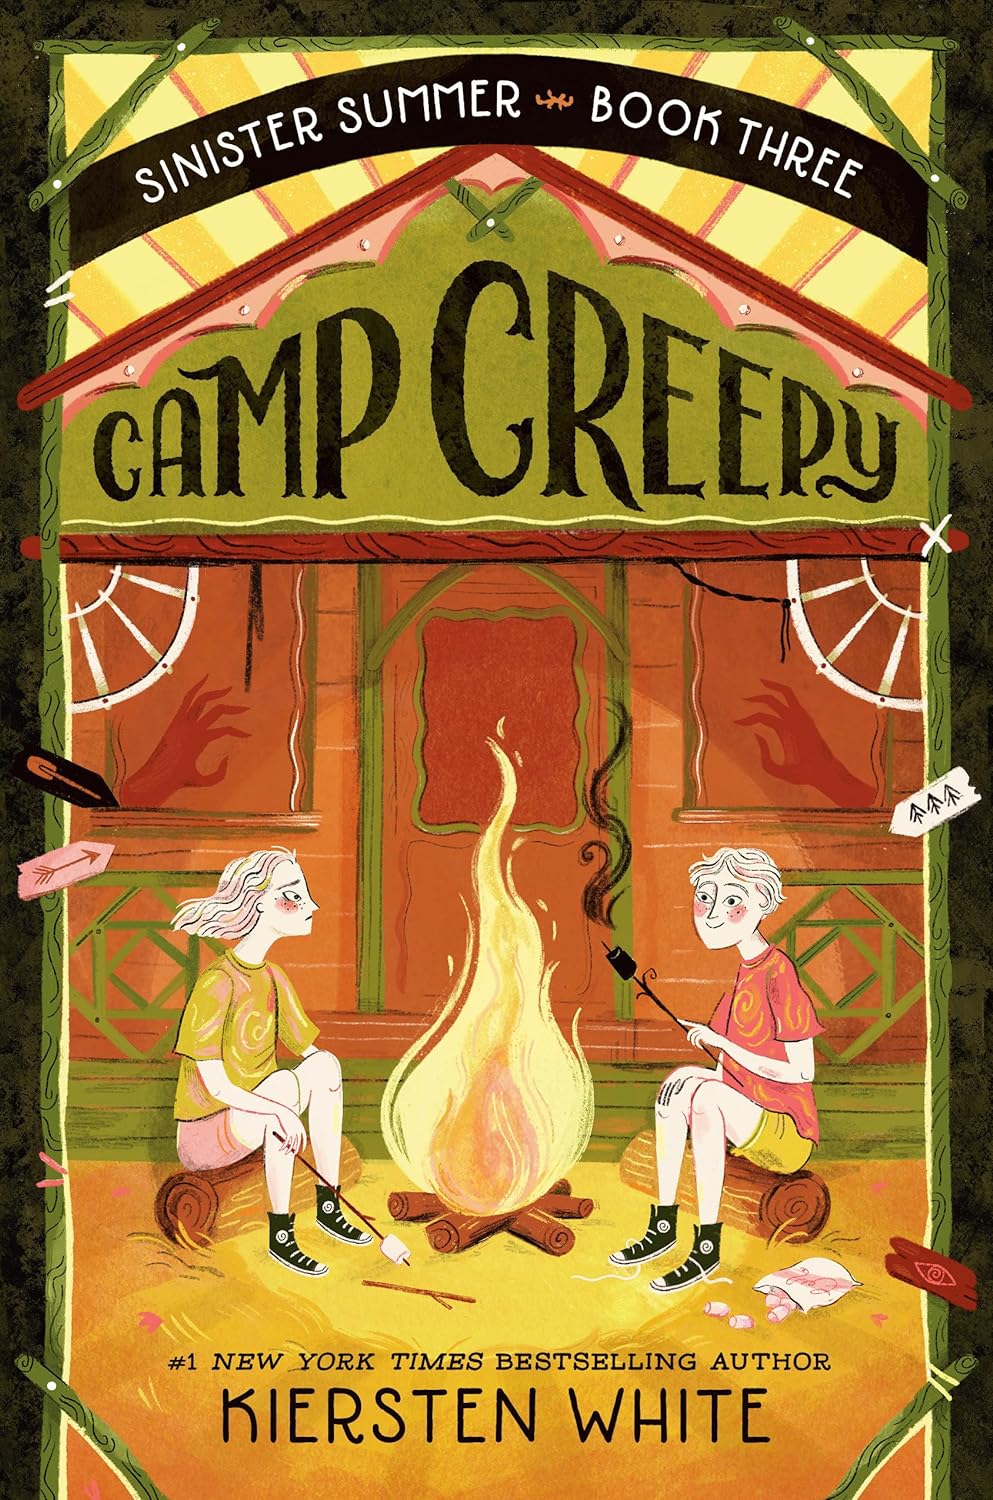 Cover »Camp Creepy«